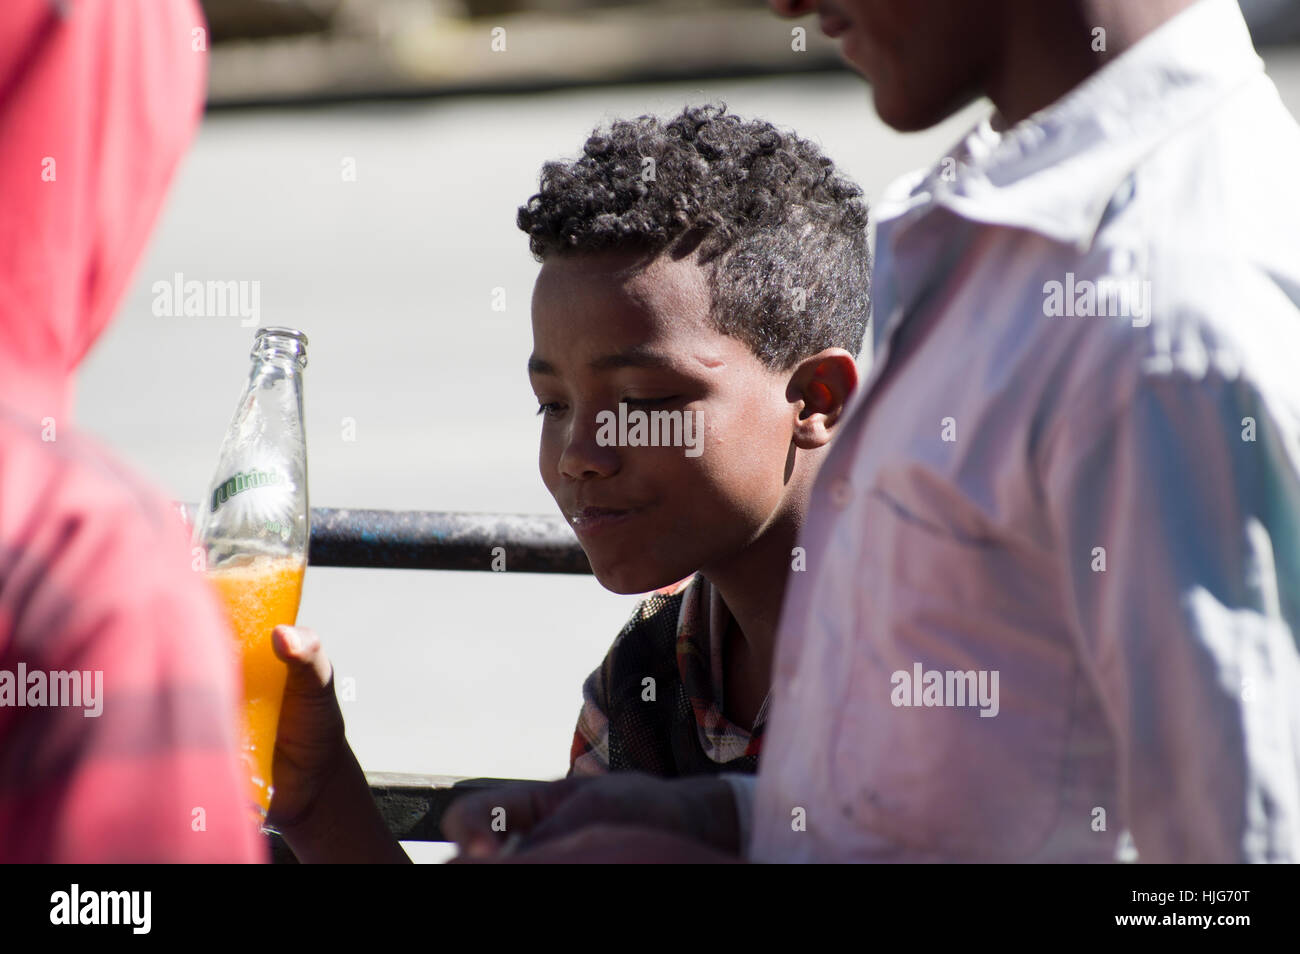 Ethiopian boy smiling with an orange bottle of Miranda Stock Photo